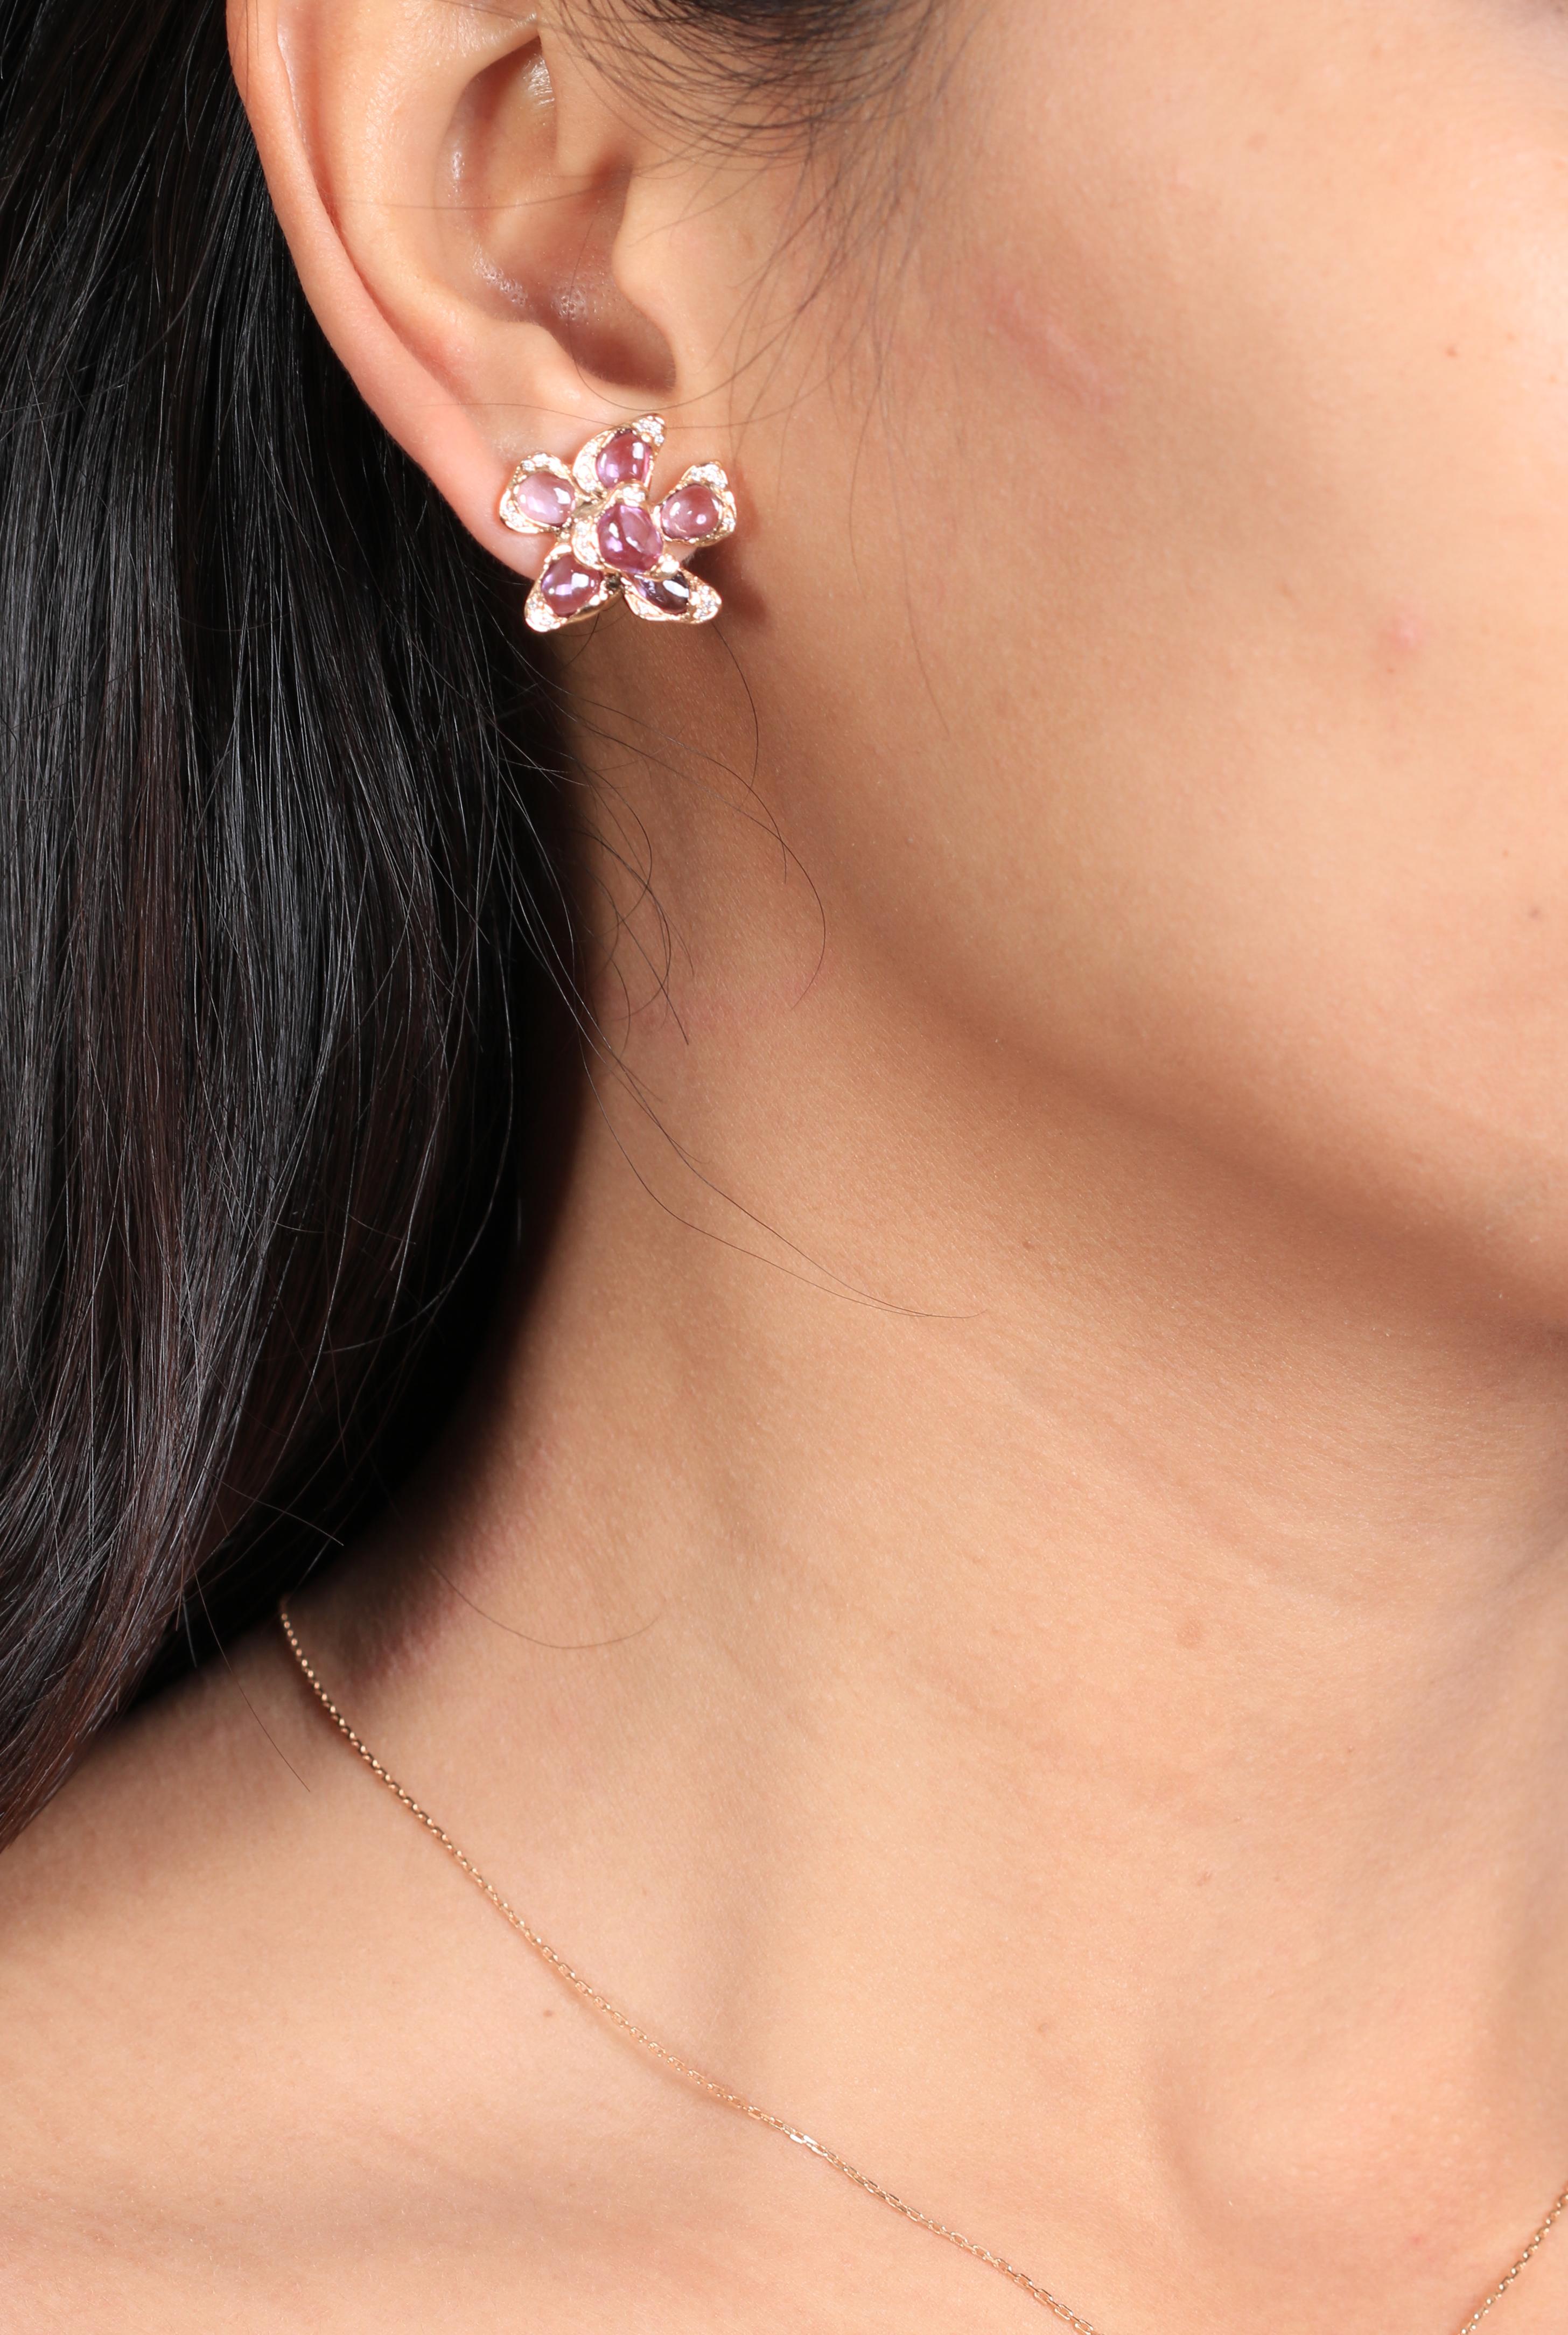 Romantic 18 Karat Rose Gold Flower Earrings with Pink Sapphires